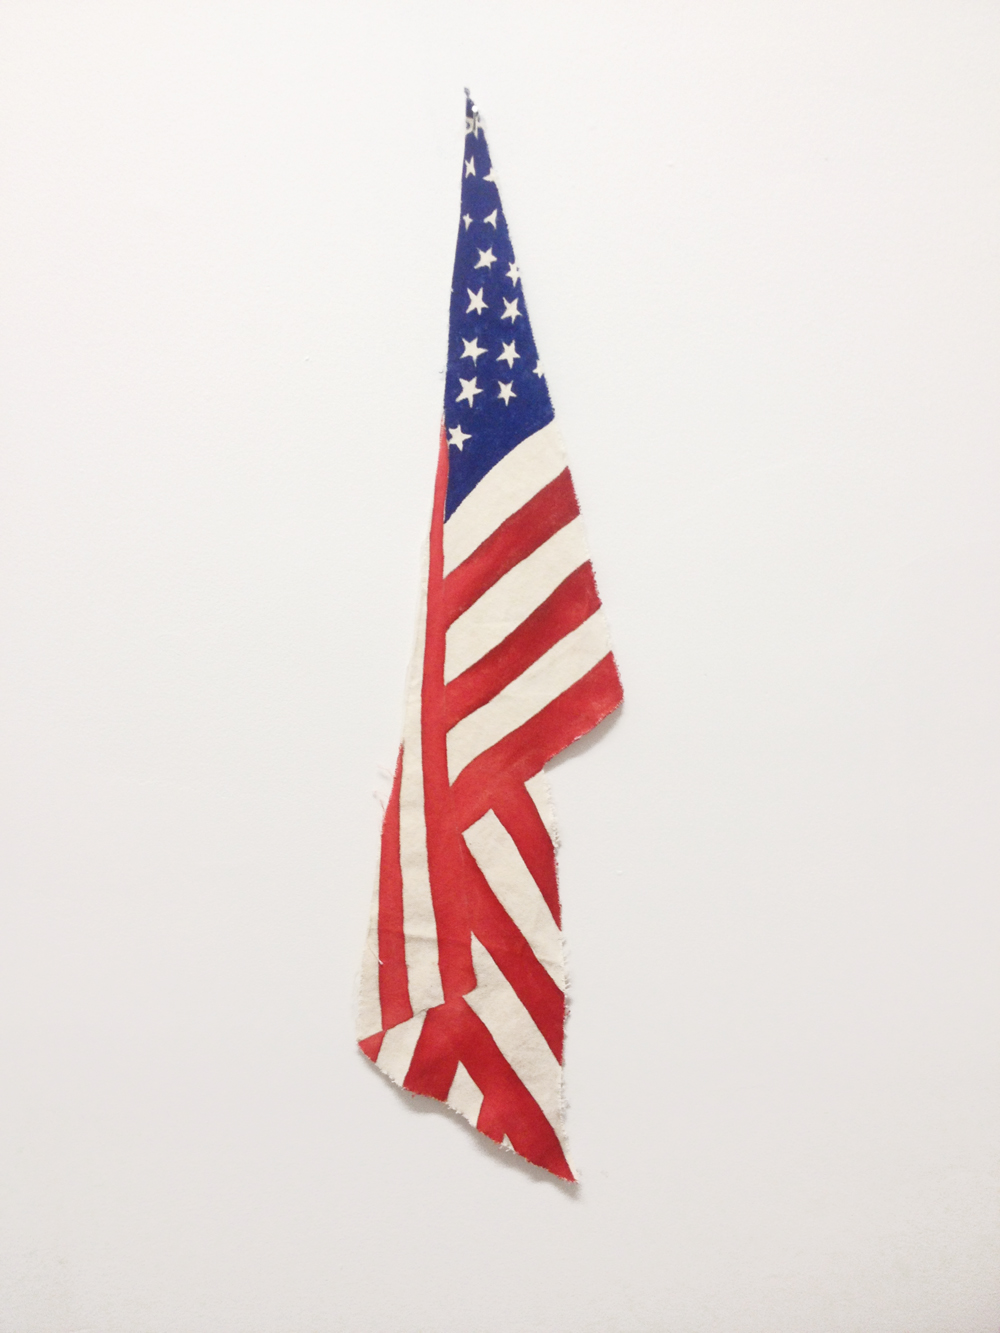 Untitled (Flag), 2012